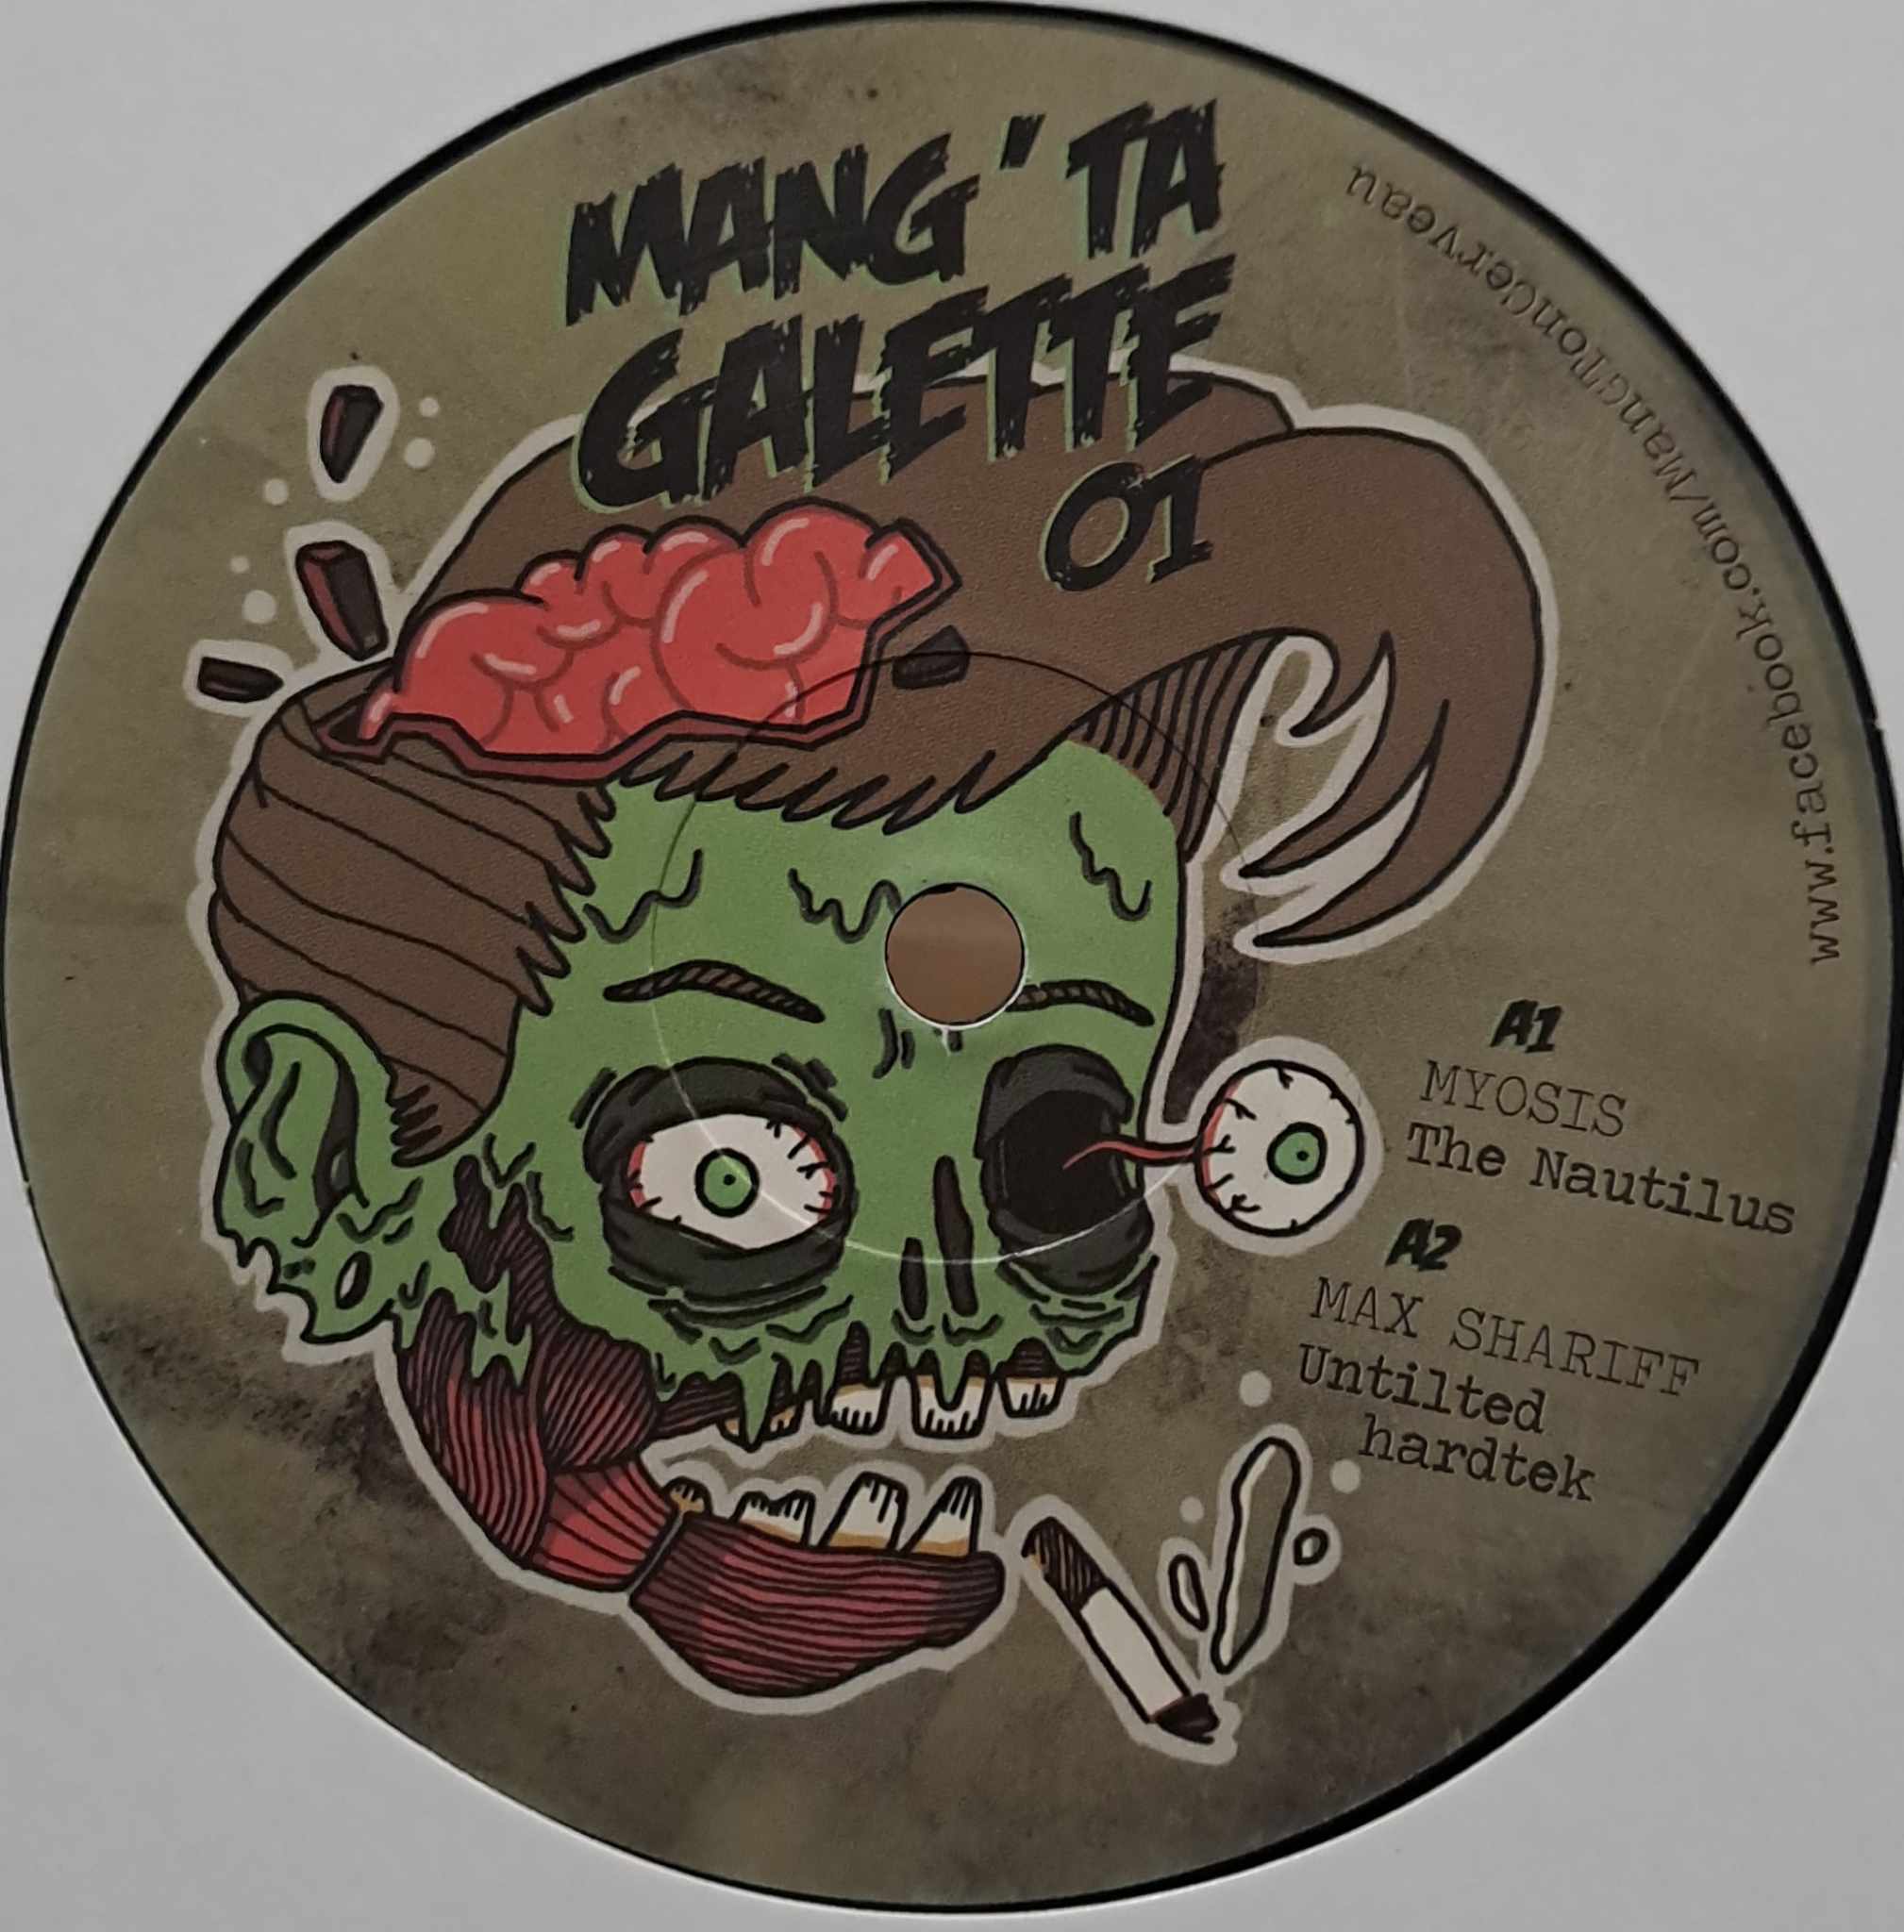 Mang' Ta Galette 01 - vinyle freetekno